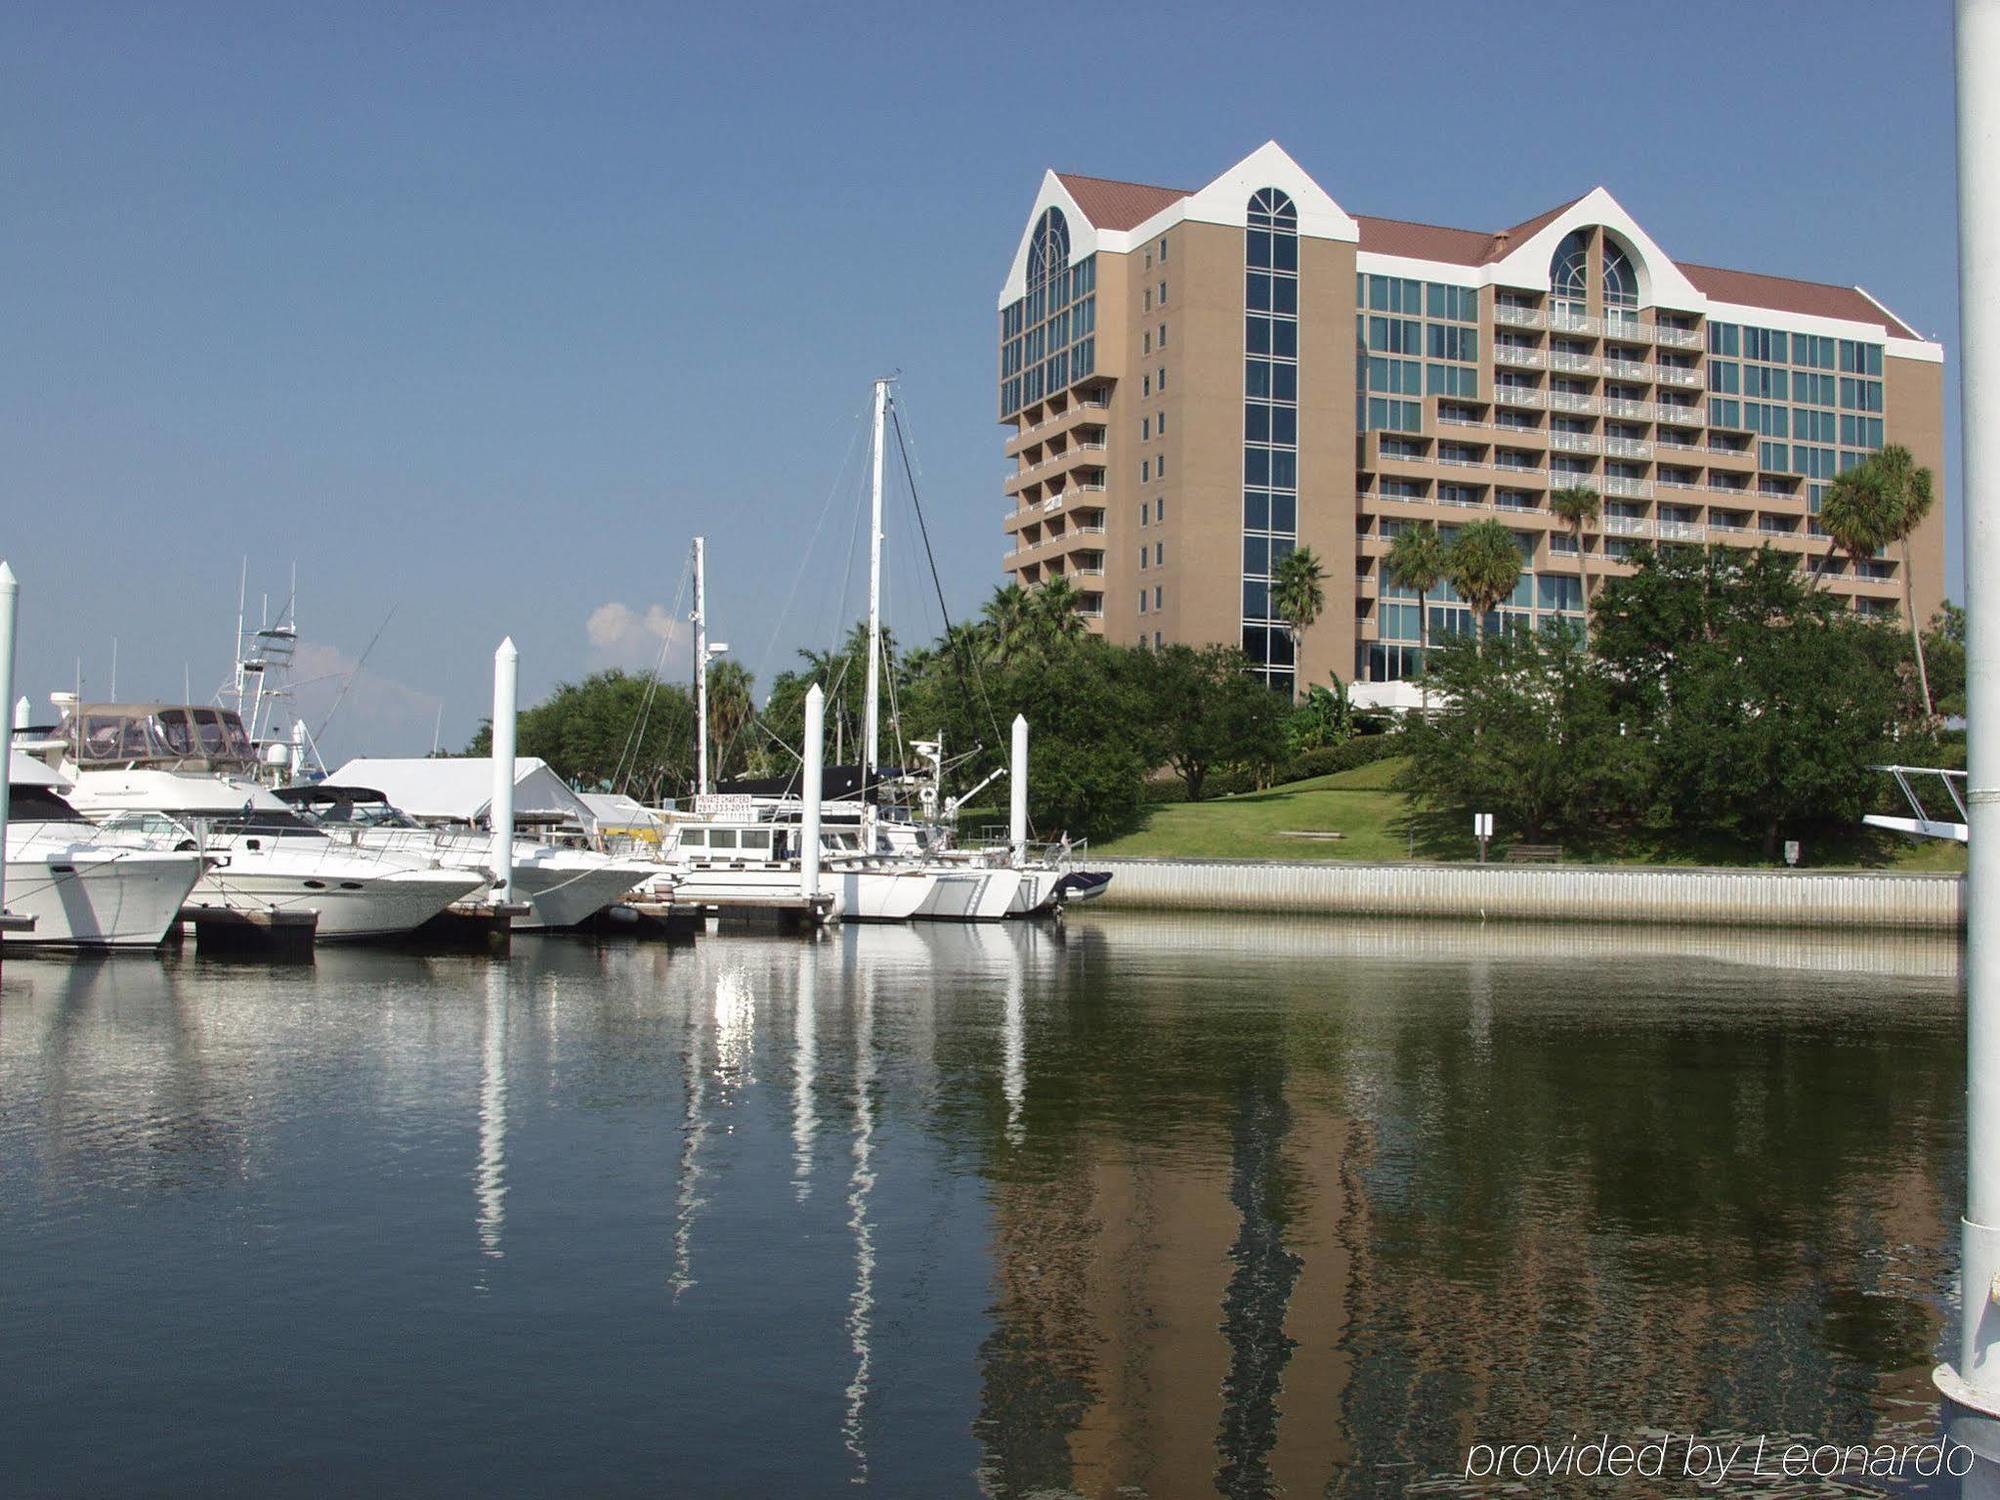 South Shore Harbour Resort And Conference Center League City Exterior foto